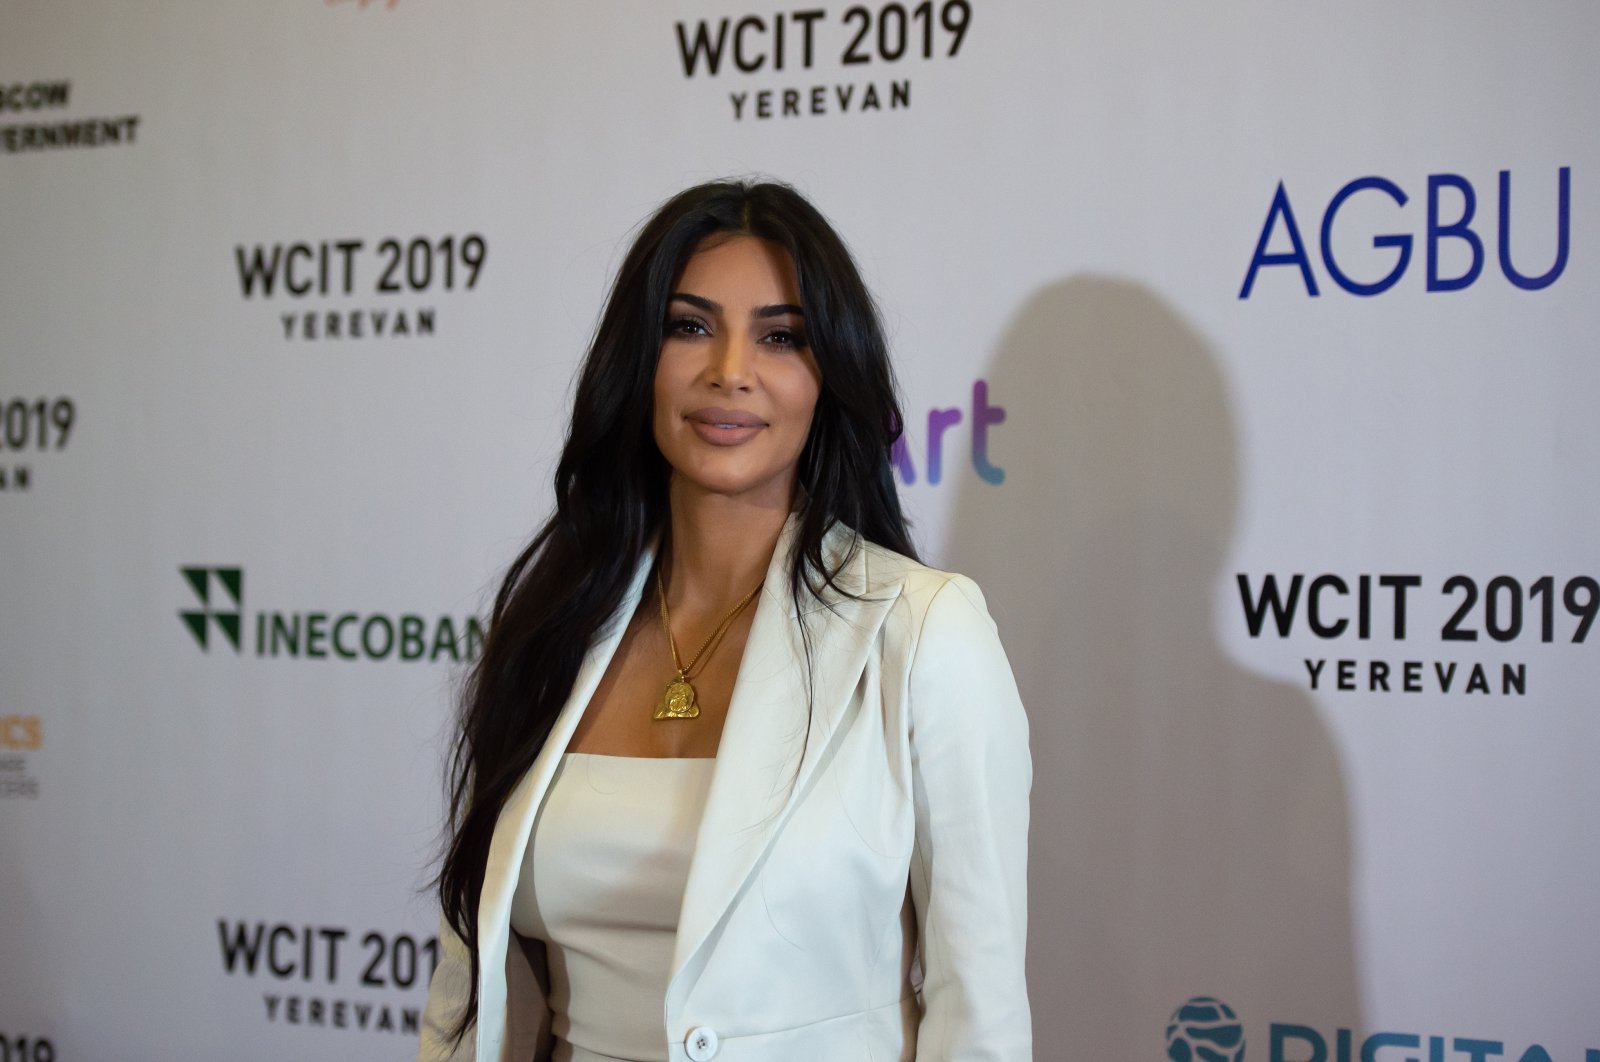 US Reality TV star Kim Kardashian poses for a photo as she arrives at World Congress On Information Technology (WCIT), Yerevan, Armenia, Oct. 8, 2019. (Shutterstock Photo) 